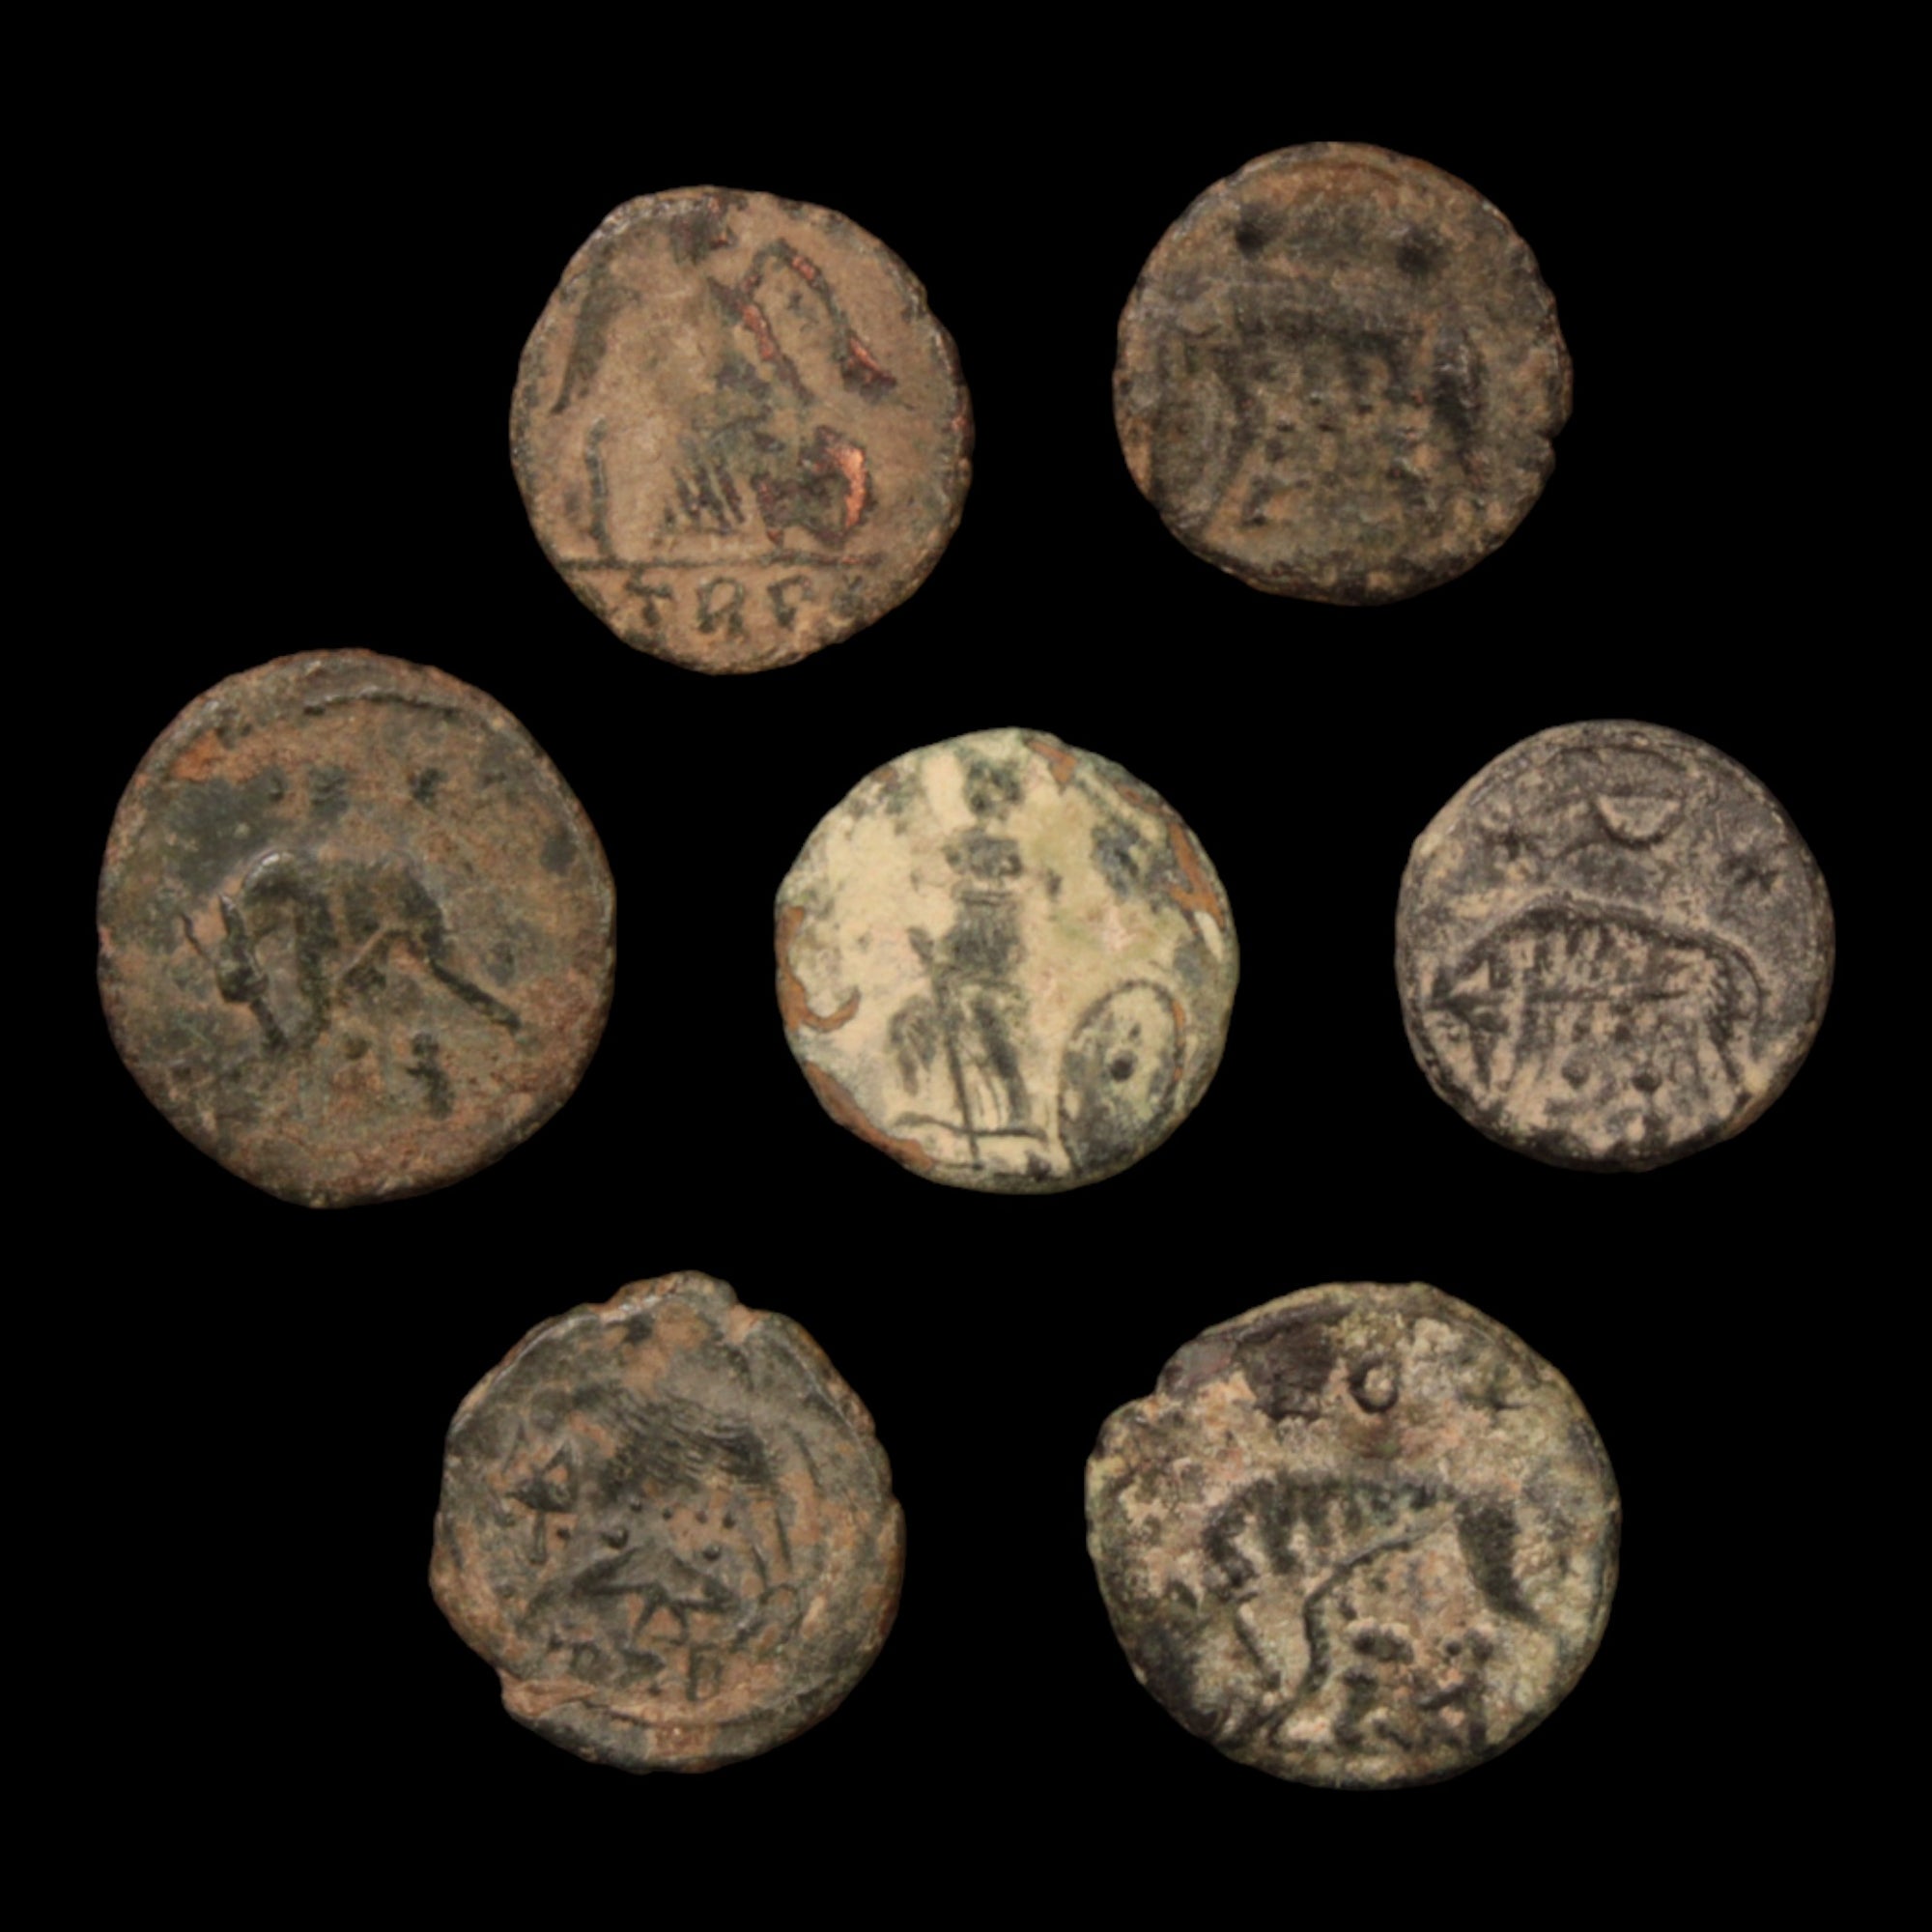 Lot of 7: Urbs Roma (Romulus & Remus) and Constantinopolis Commemoratives, Low Grade - c. 330 to 348 CE - Roman Empire